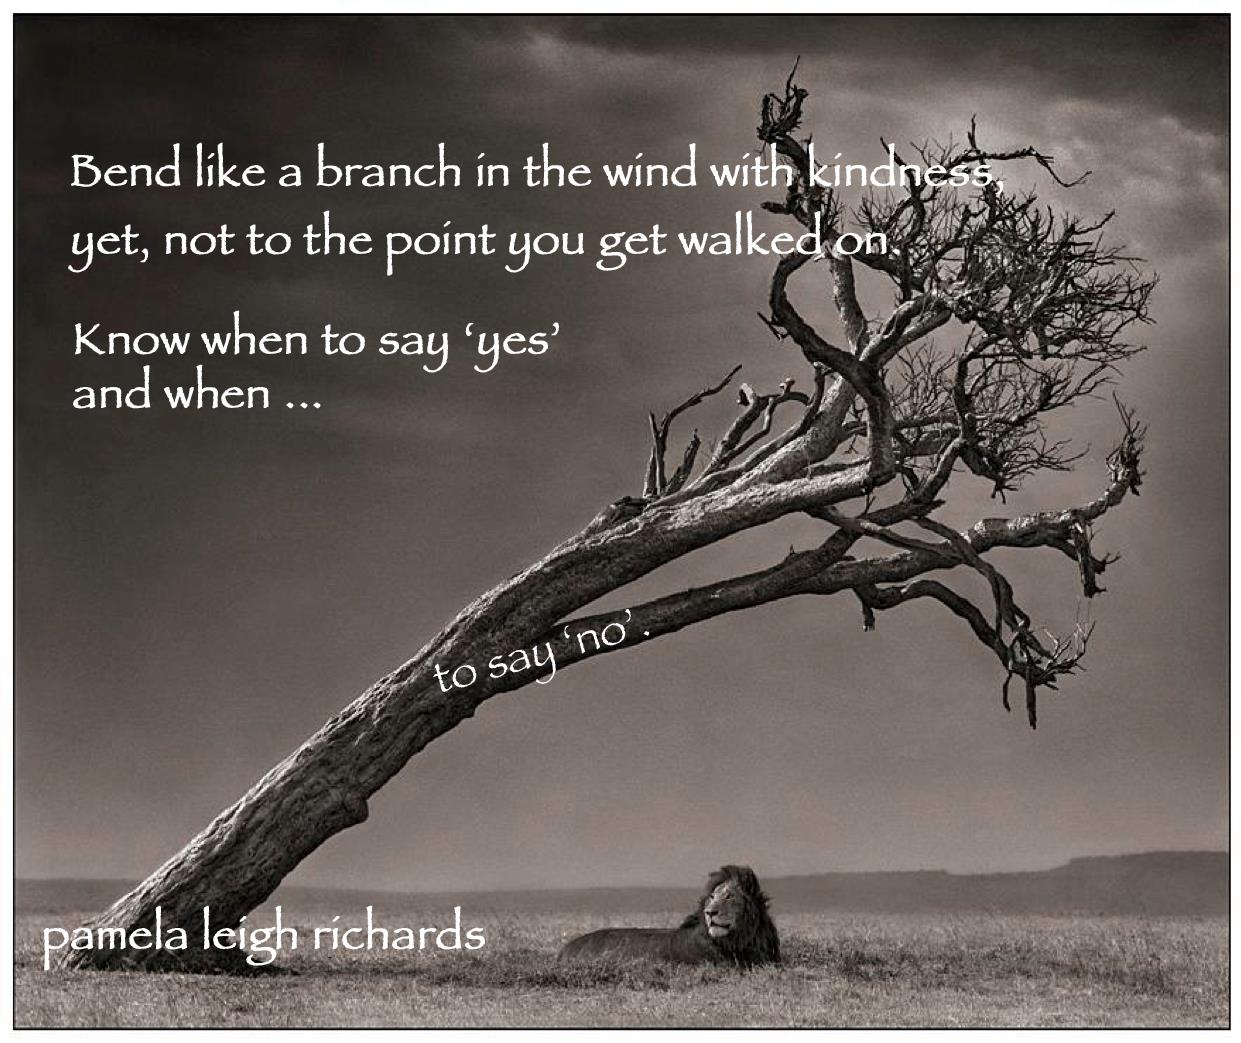 Lion-Tree-Bending-like-a-branch-pamela-quote.jpg